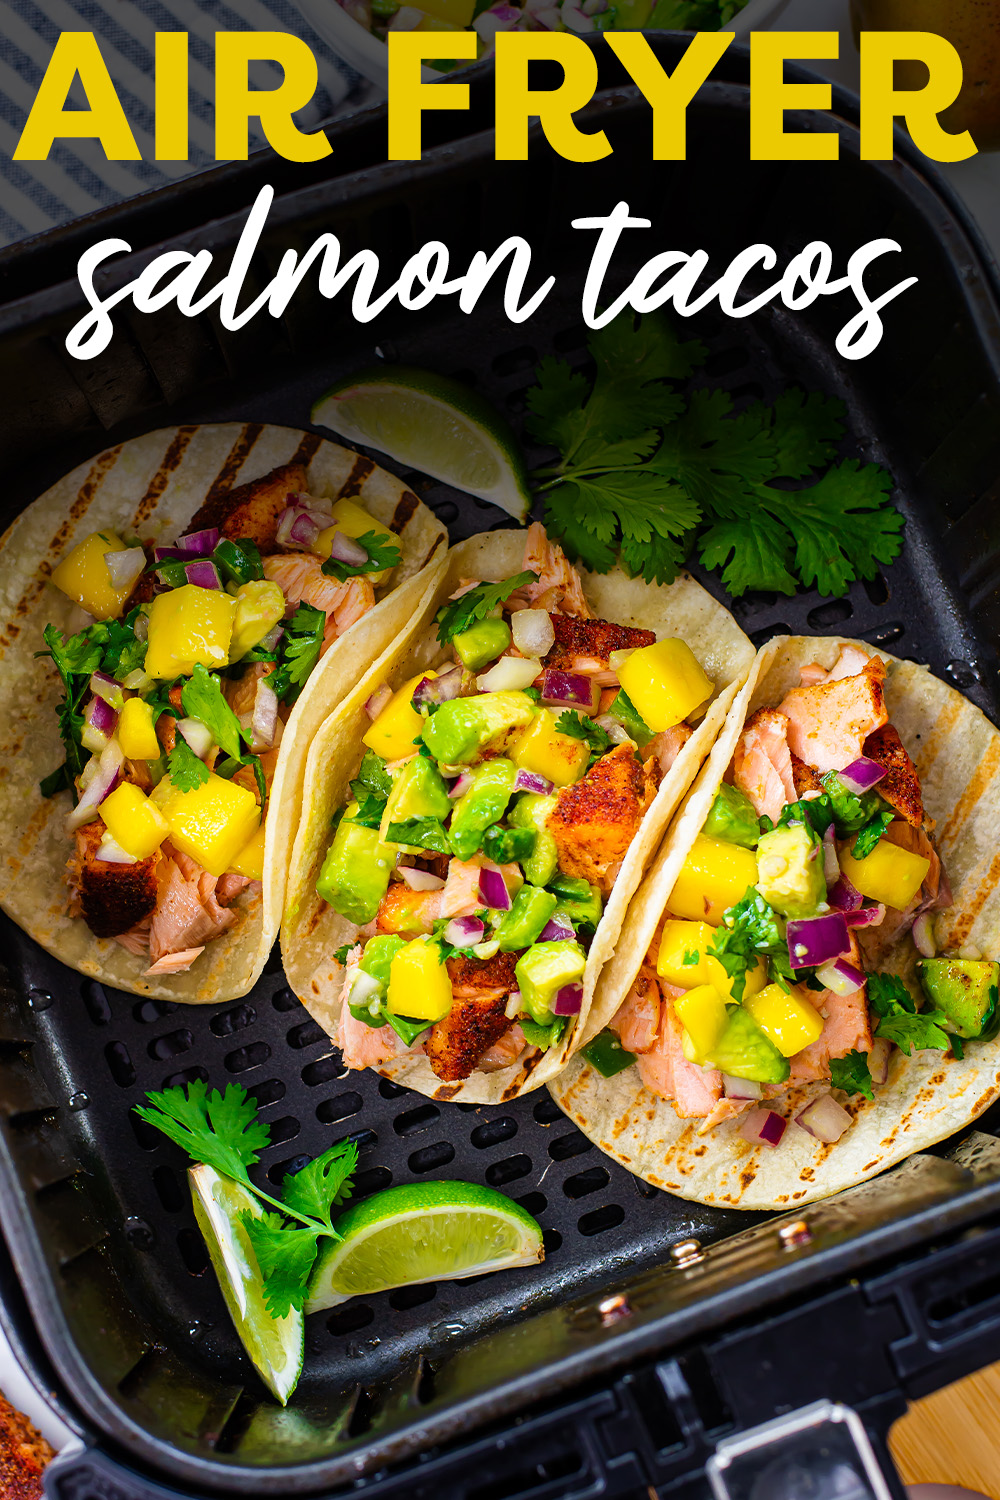 Three salmon tacos with mango salsa in an air fryer basket.